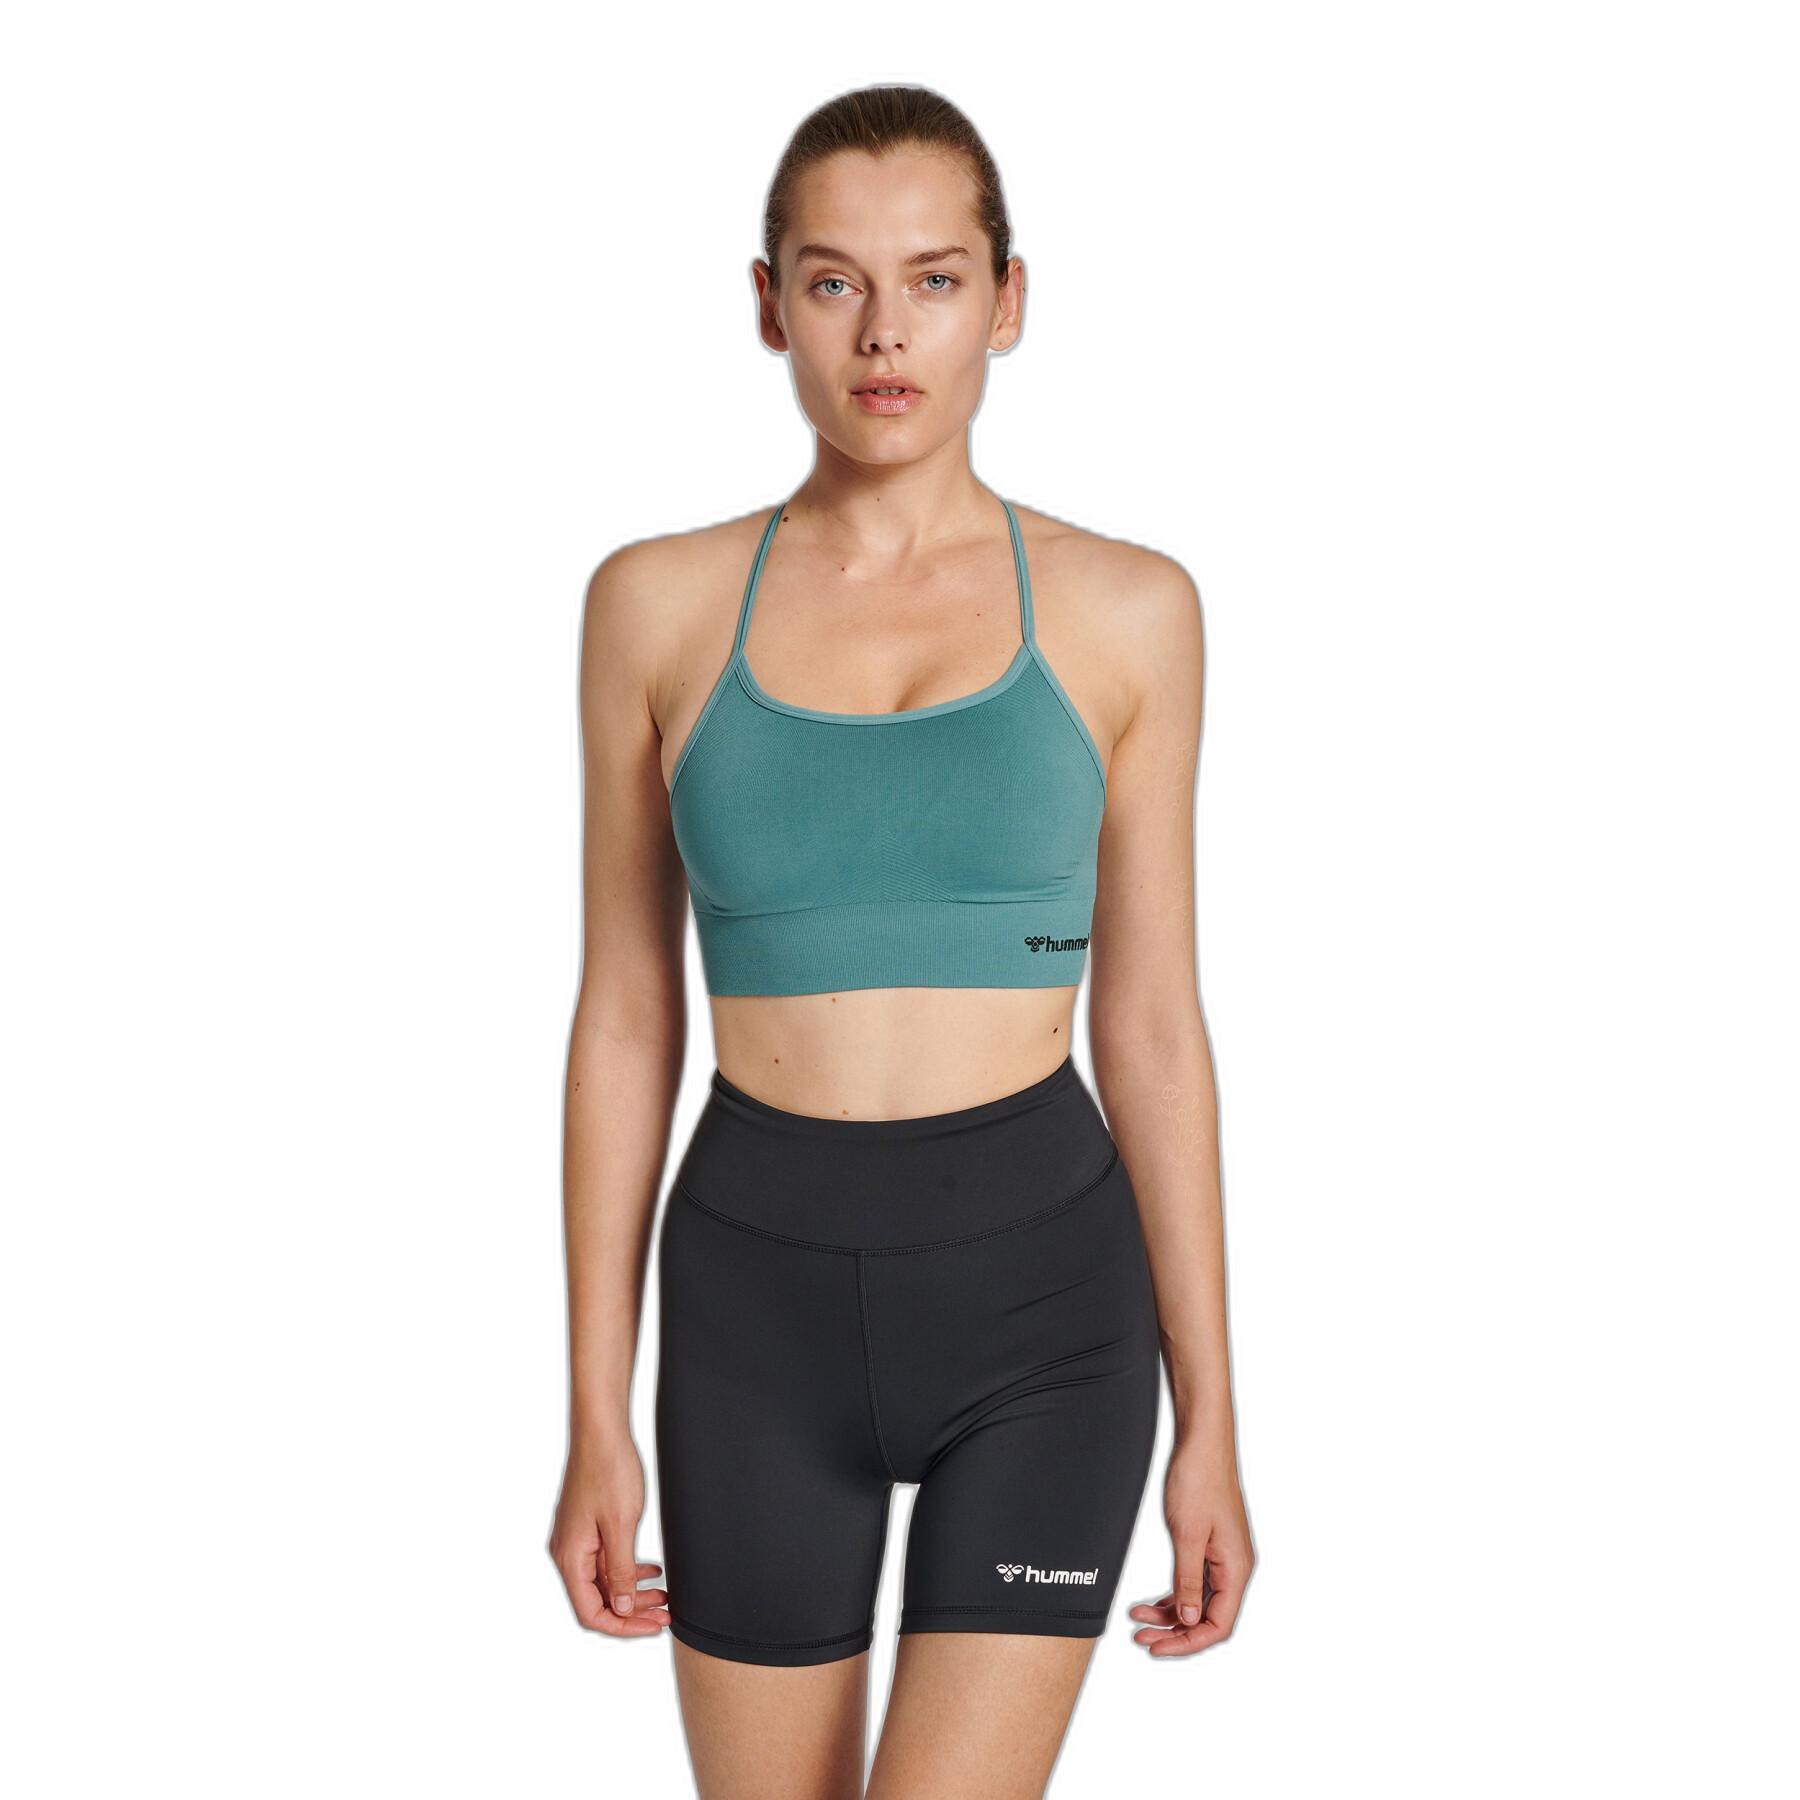 Seamless sports bra for women Hummel MT Energy - Hummel - Brands - Lifestyle